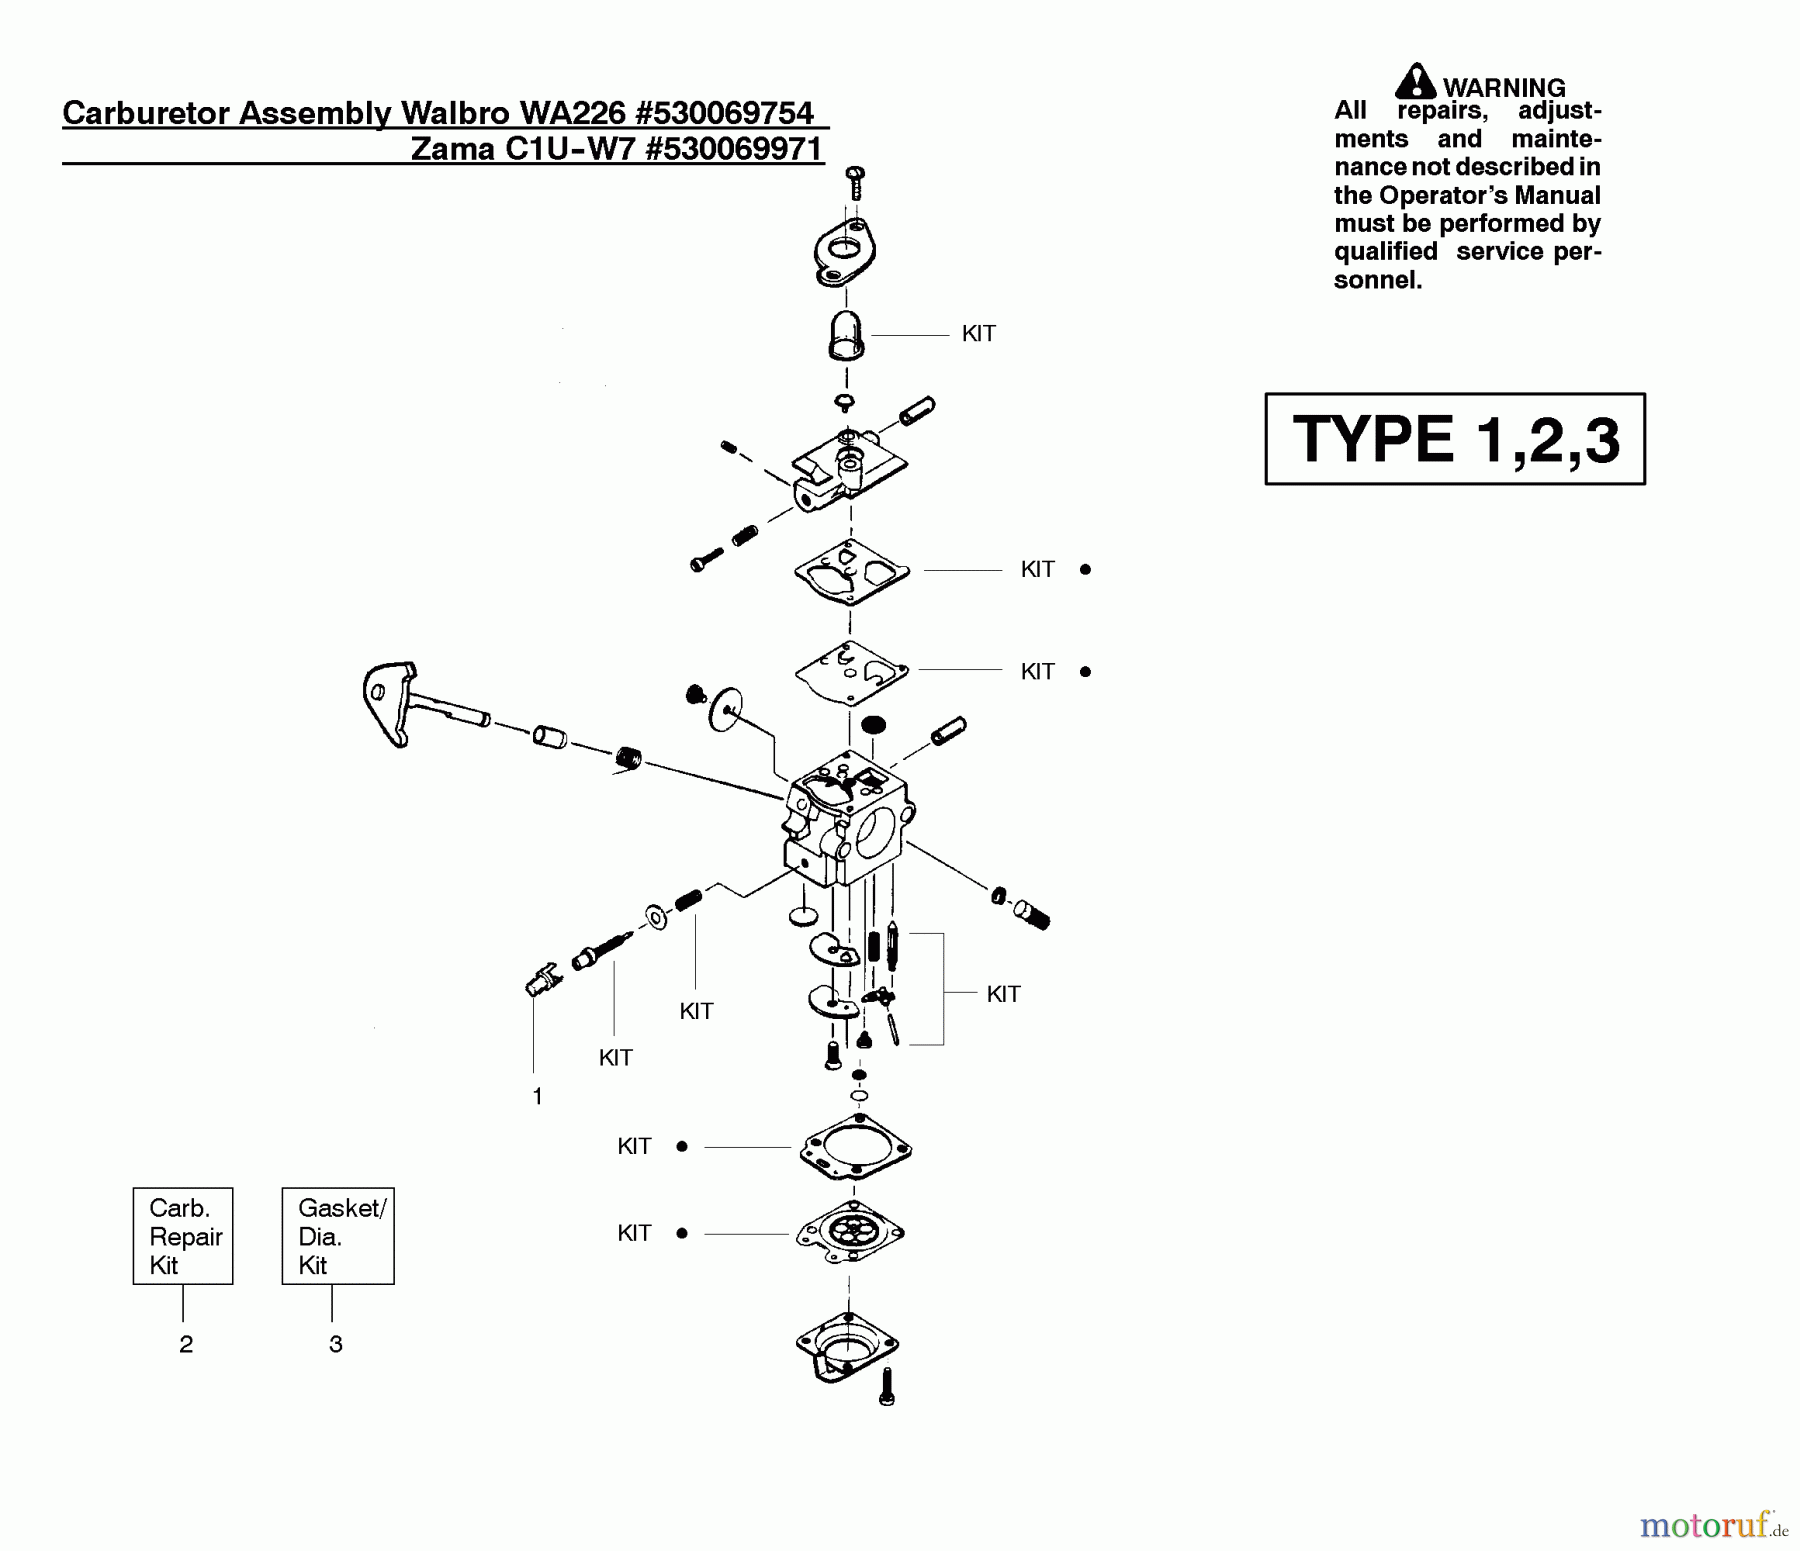  Poulan / Weed Eater Motorsensen, Trimmer PL500 (Type 1) - Weed Eater String Trimmer Carburetor Assembly (WT226) P/N 530069754, (Zama C1U-W70) P/N 530069971